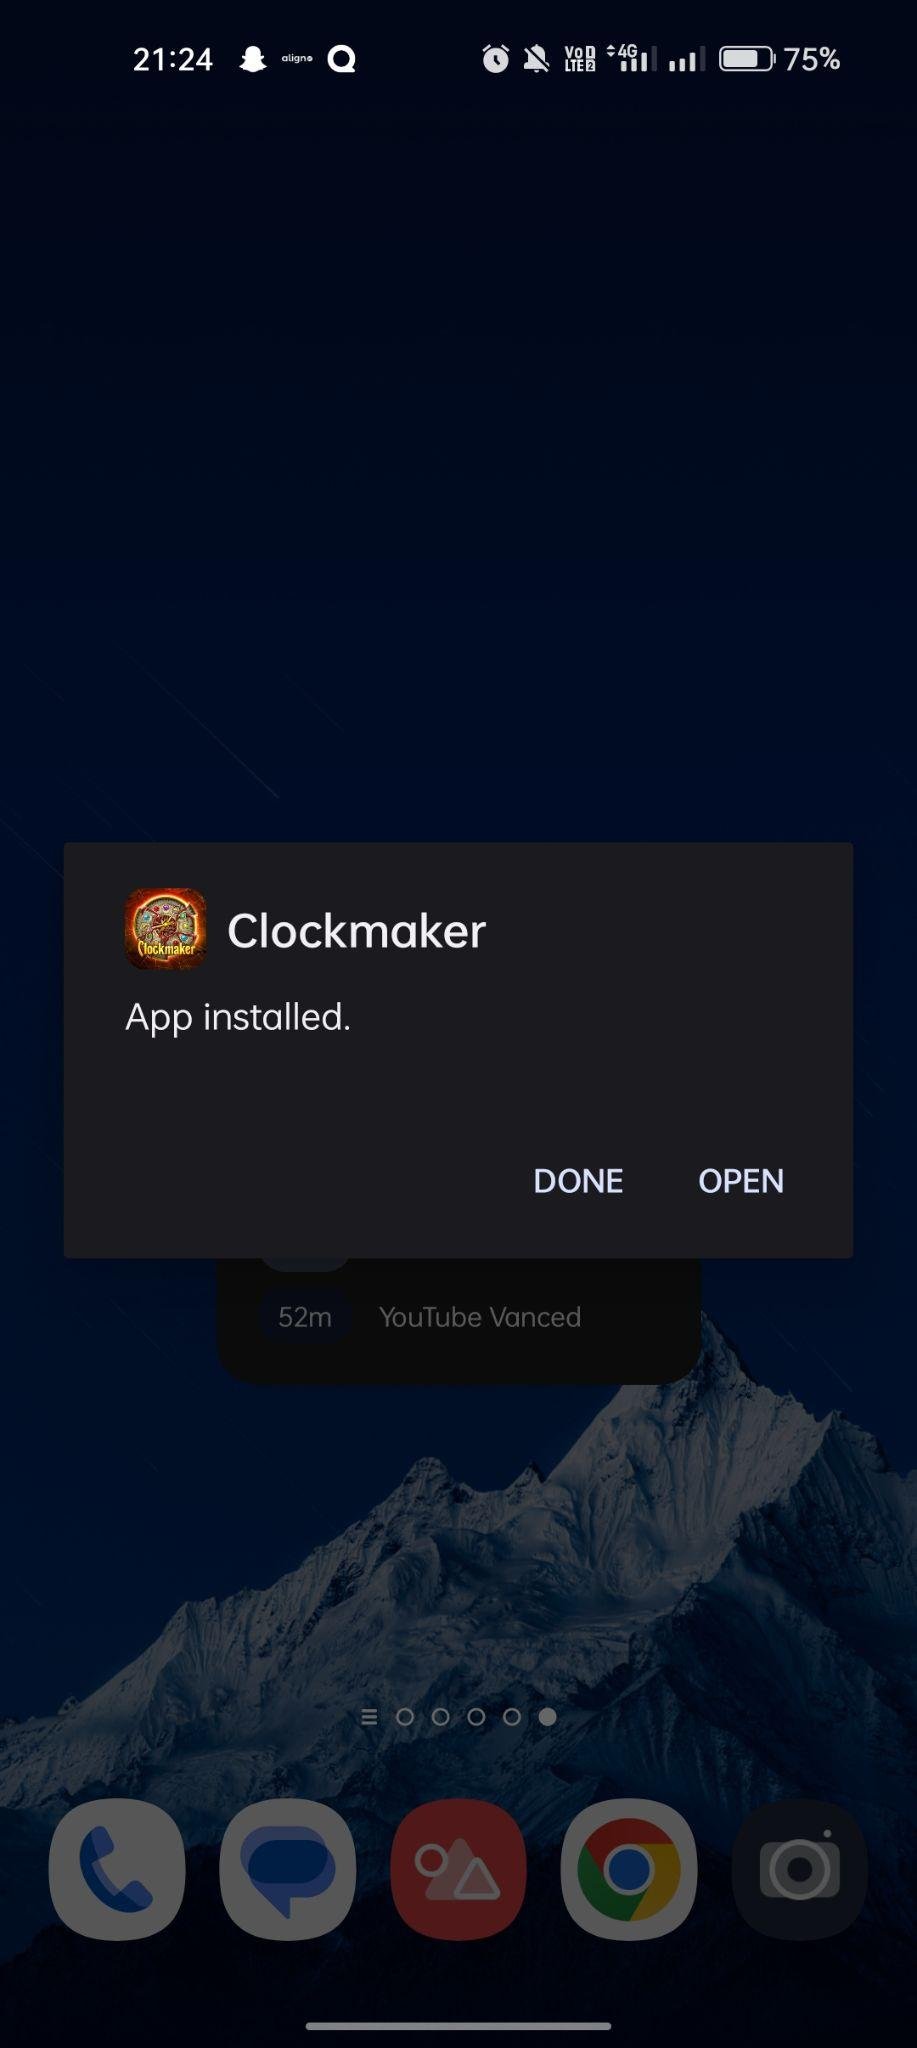 Clockmaker apk installed